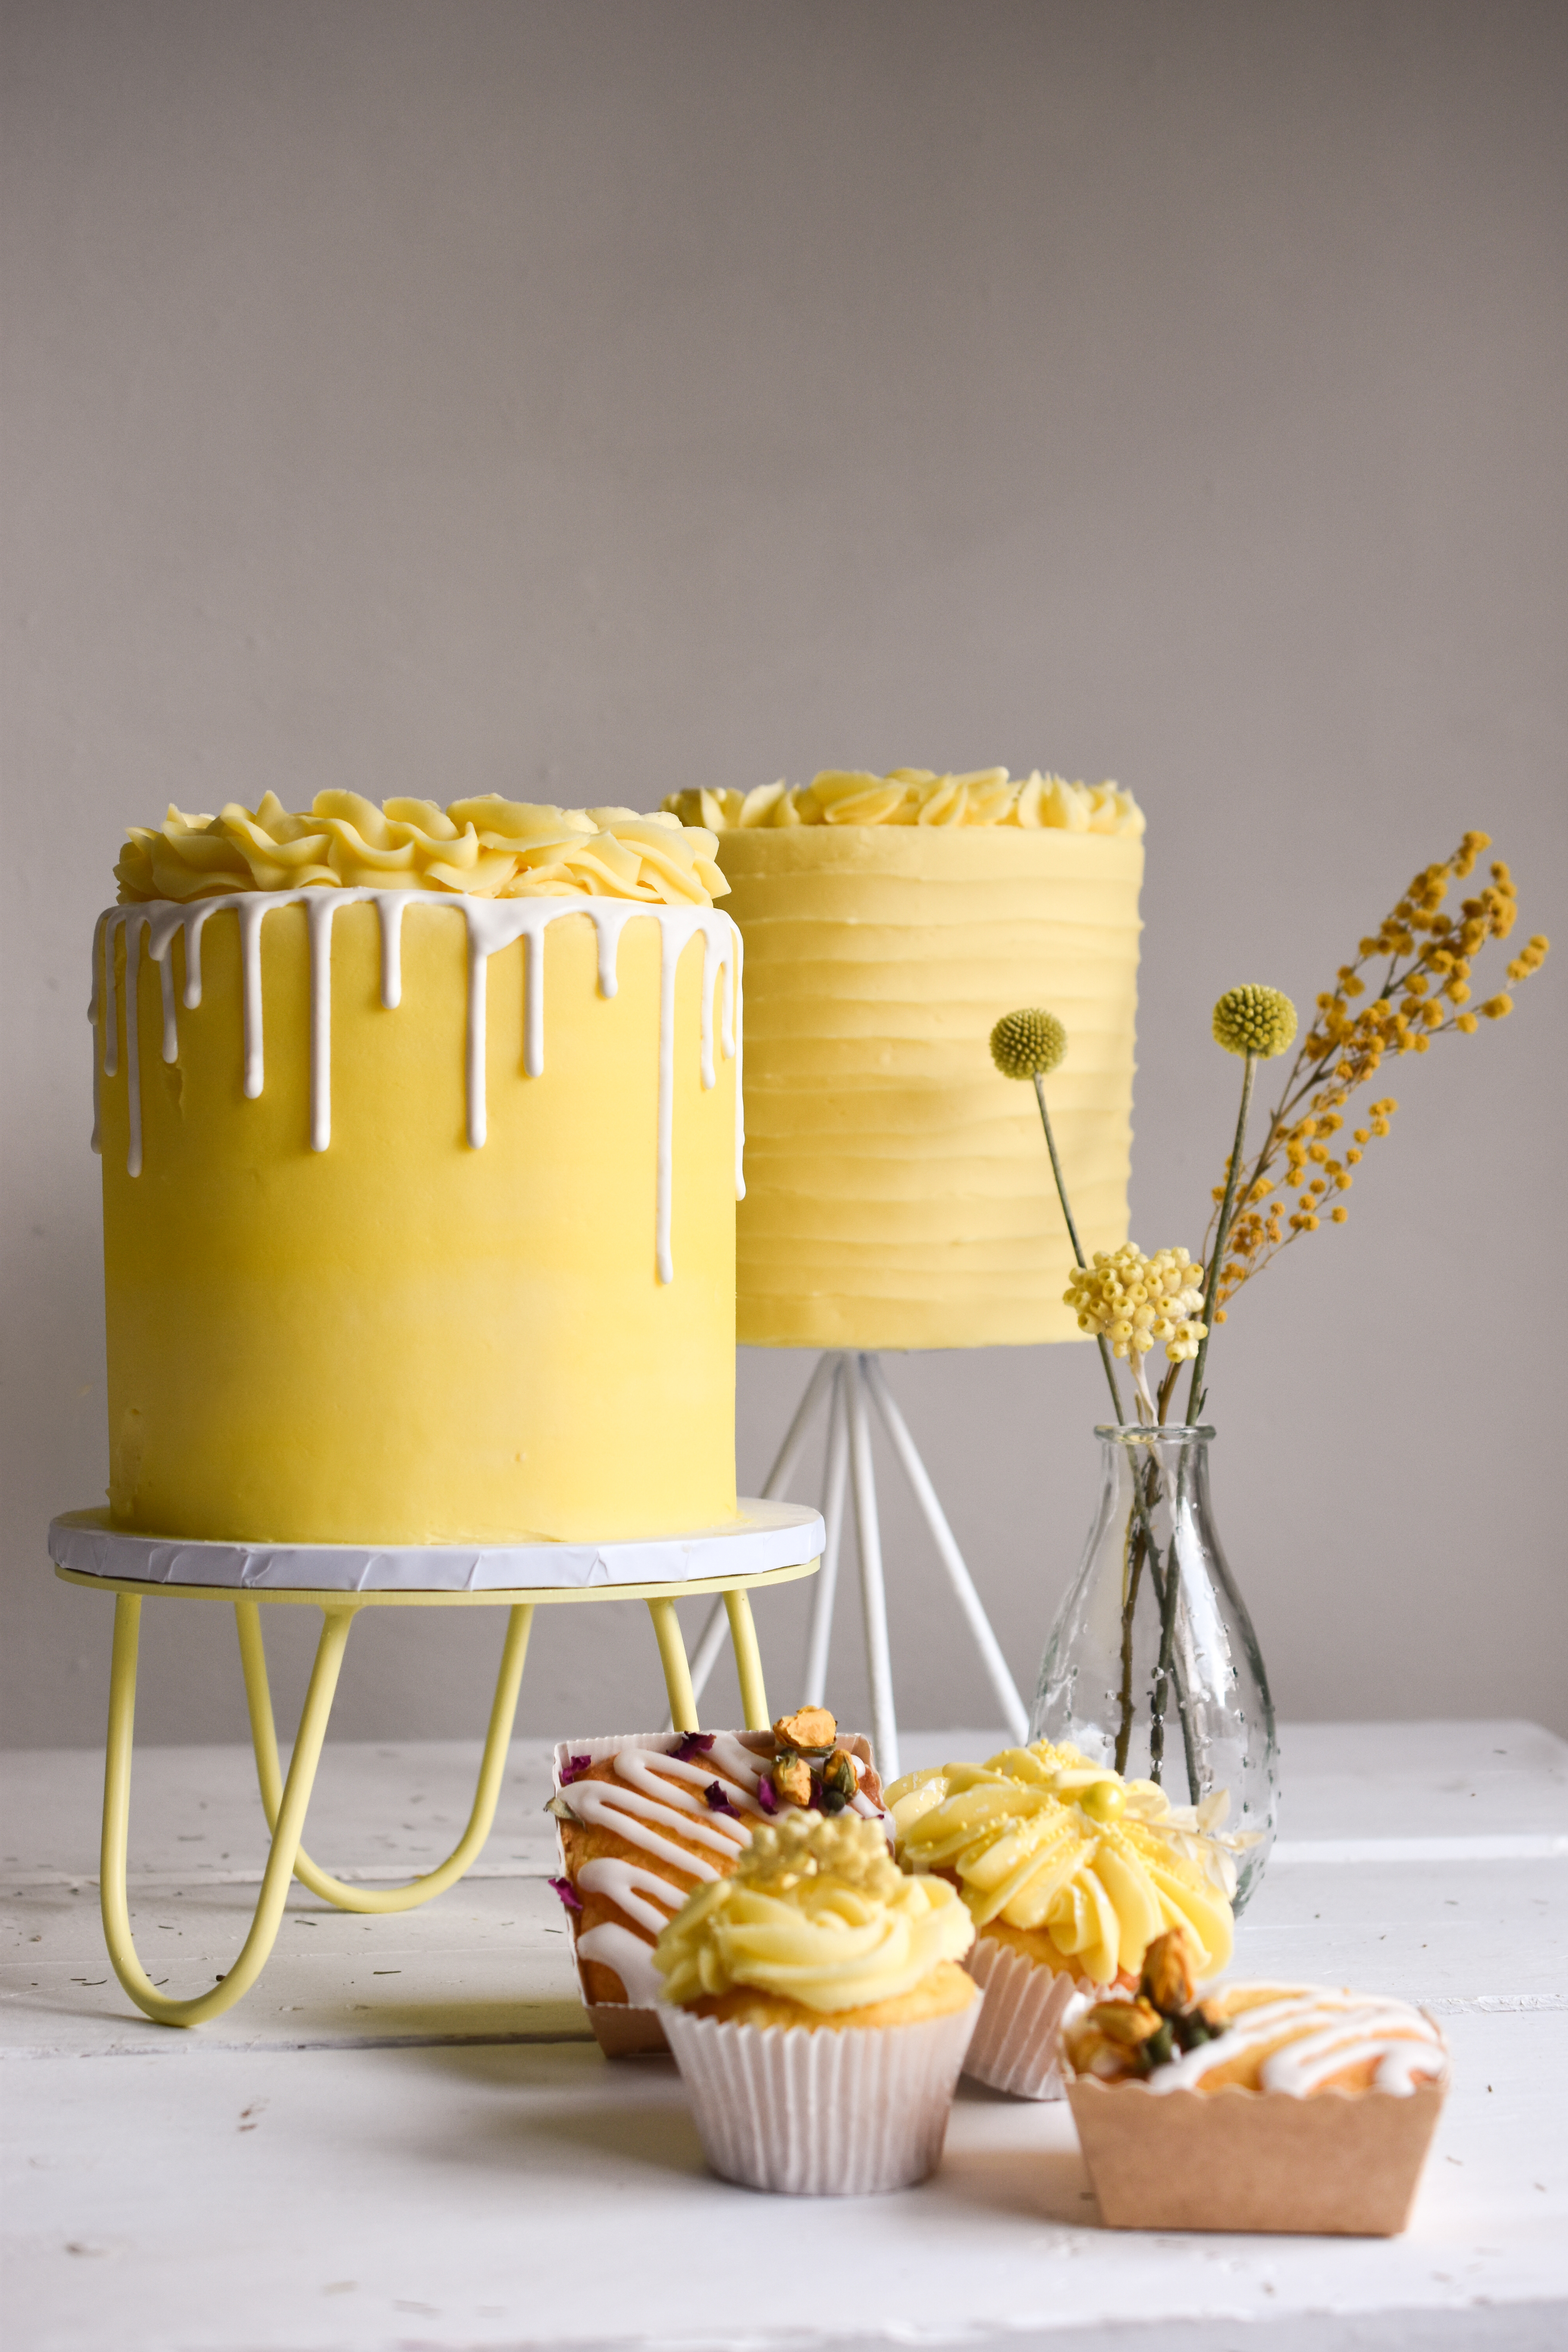 1,920 Mirror Yellow Cake Images, Stock Photos & Vectors | Shutterstock